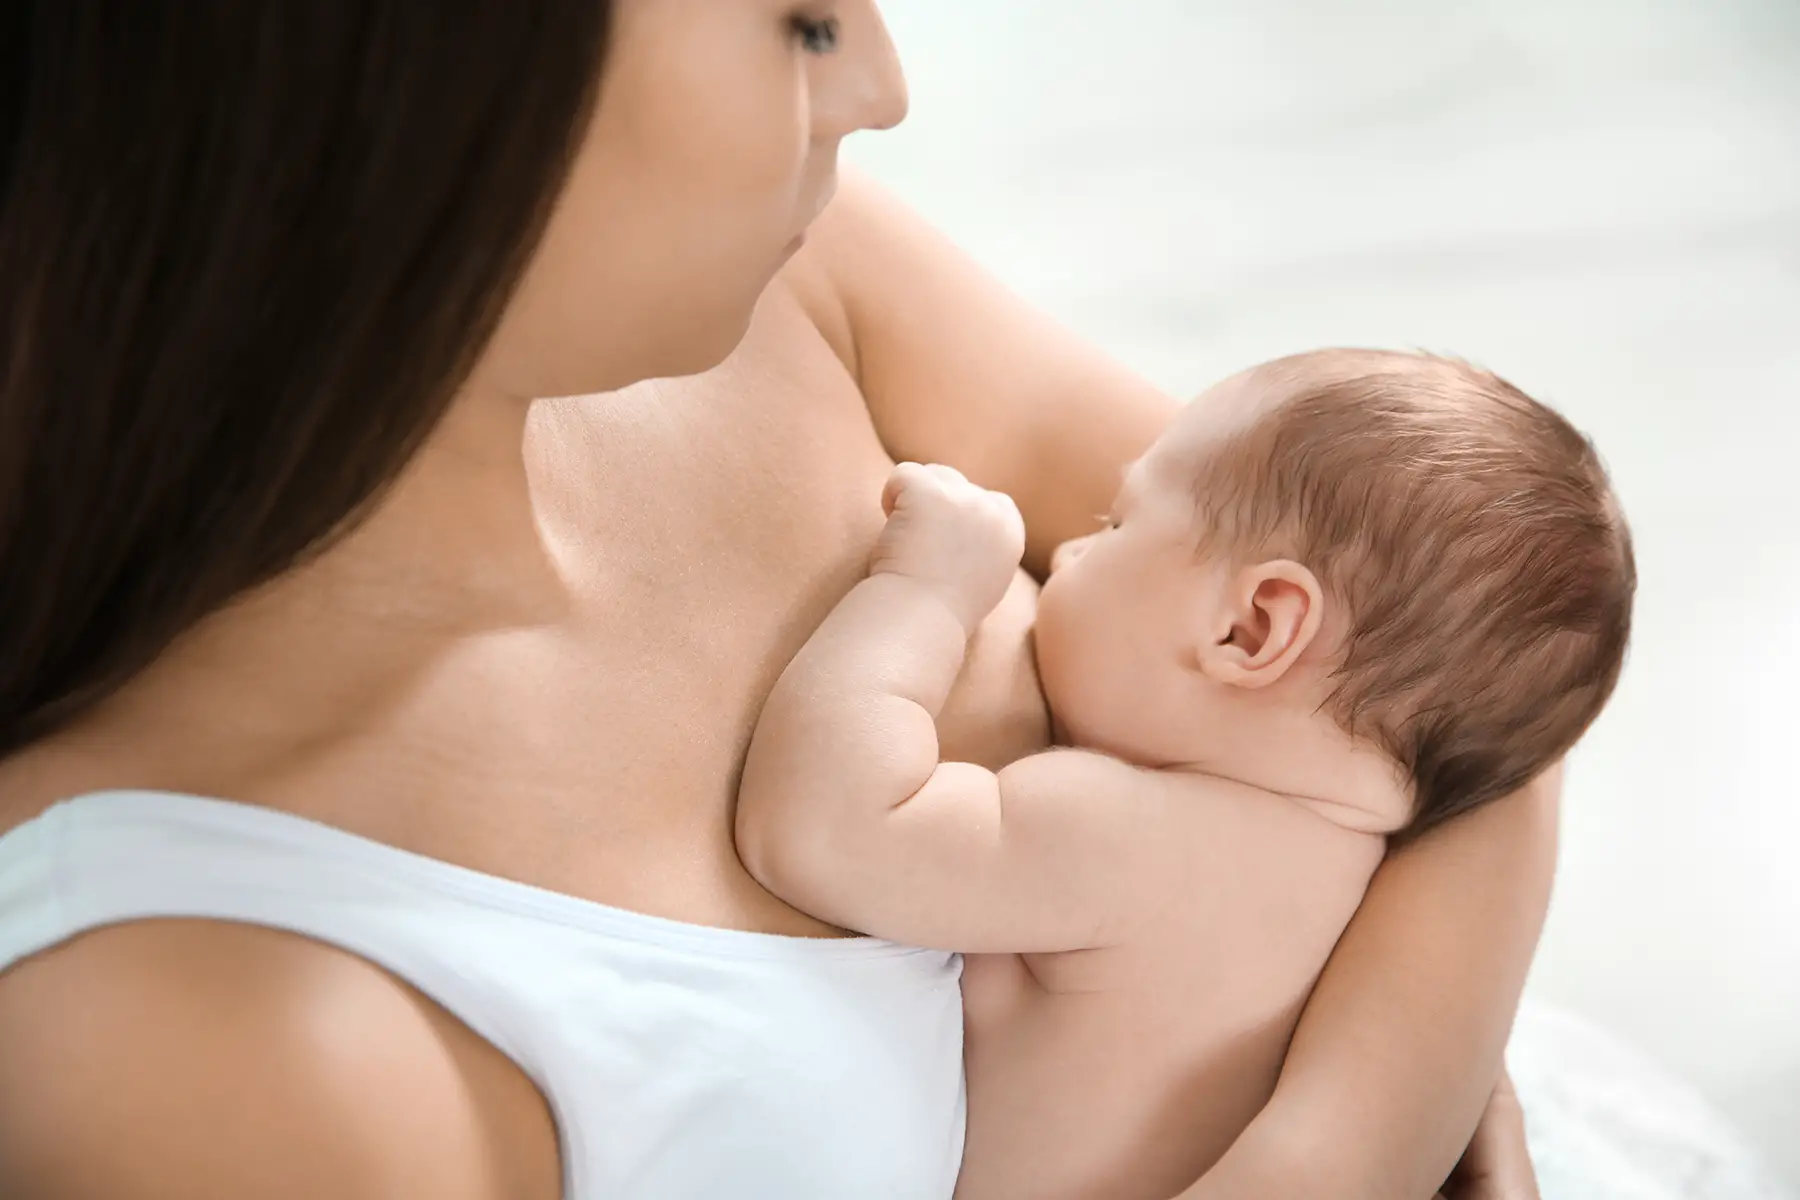 womens health uk: a woman breastfeeding her baby